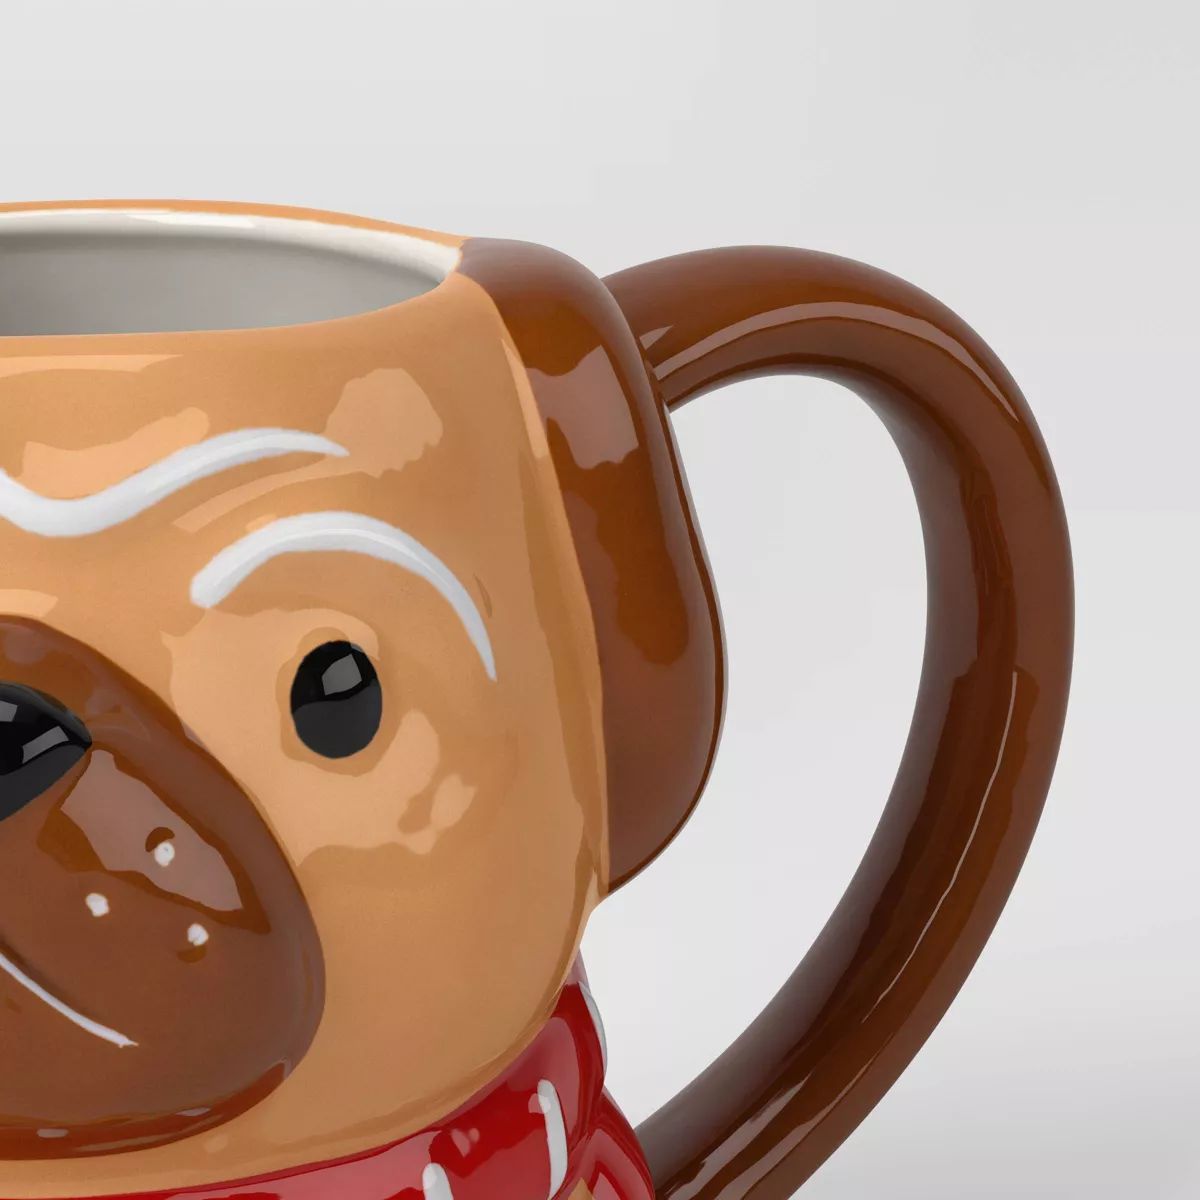 16.7oz Christmas Earthenware Figural Pug Mug - Wondershop™ | Target